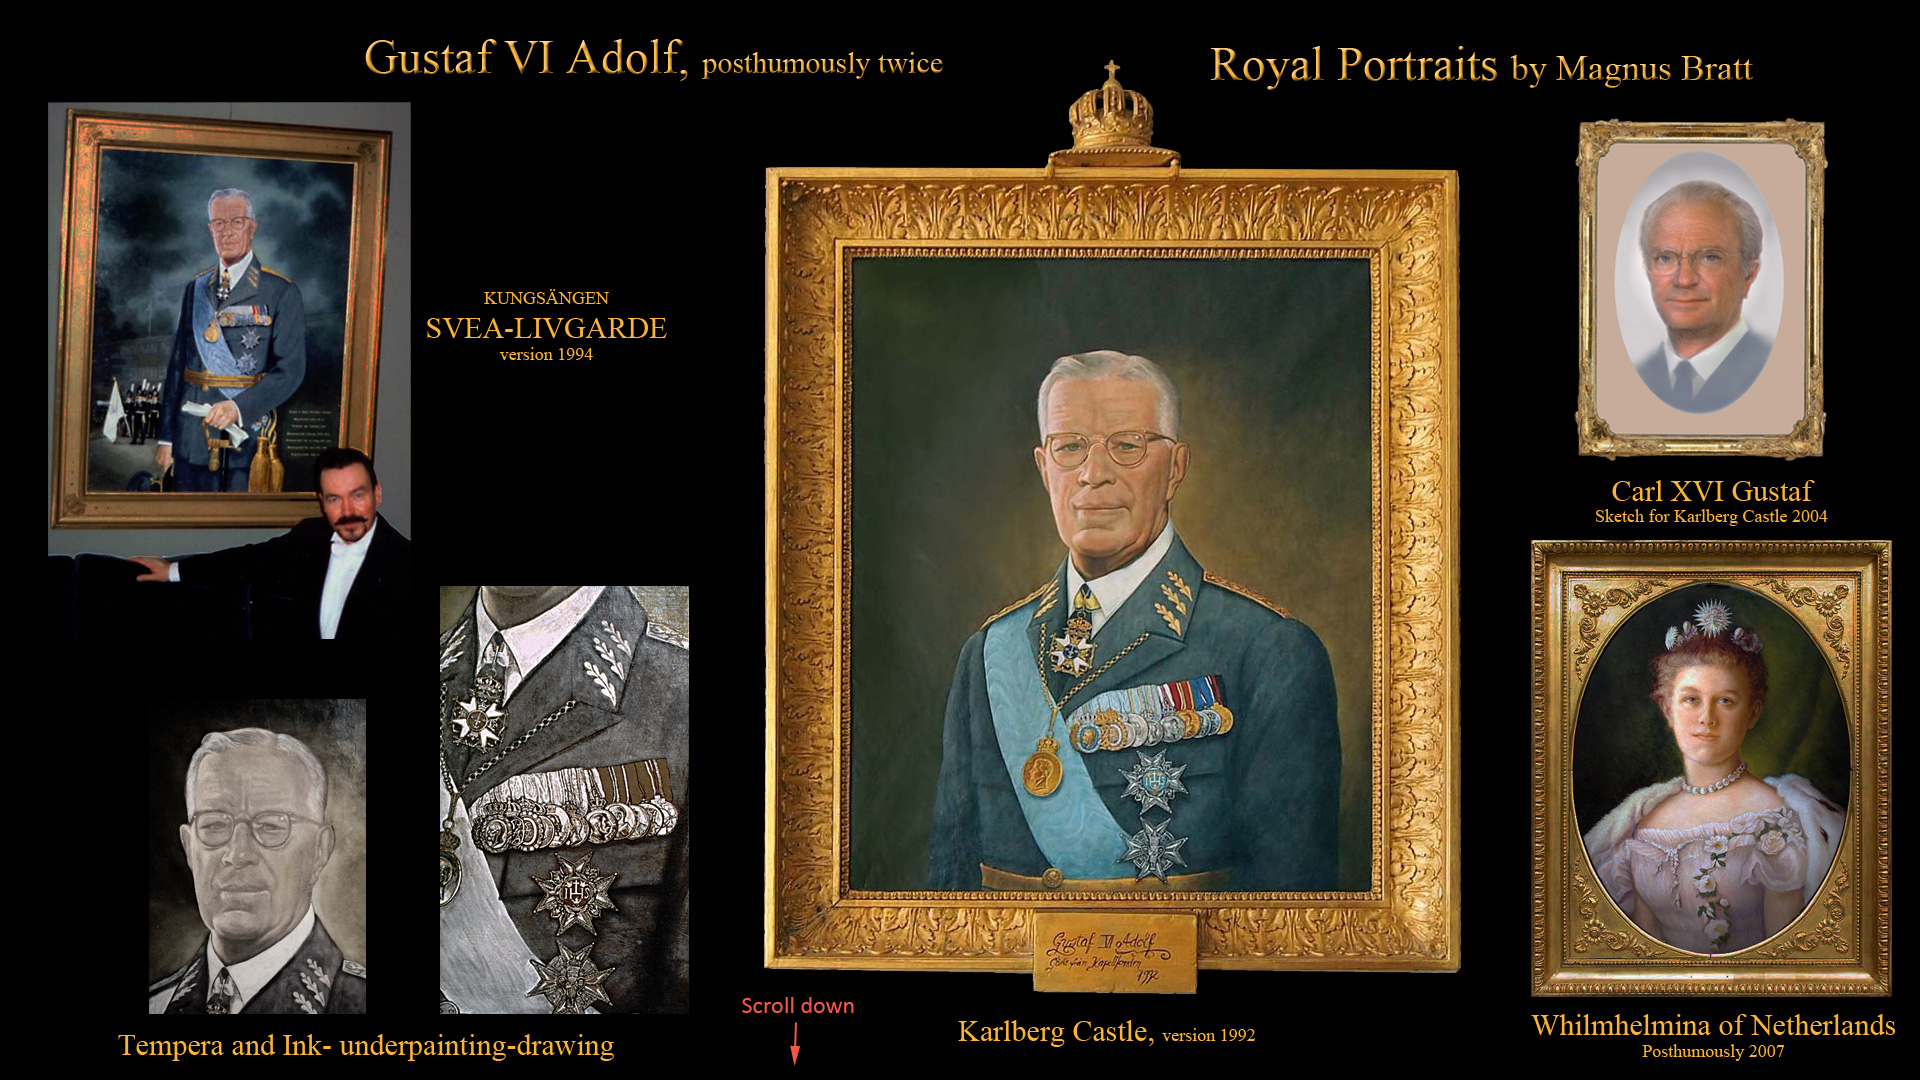 Royal Portraits